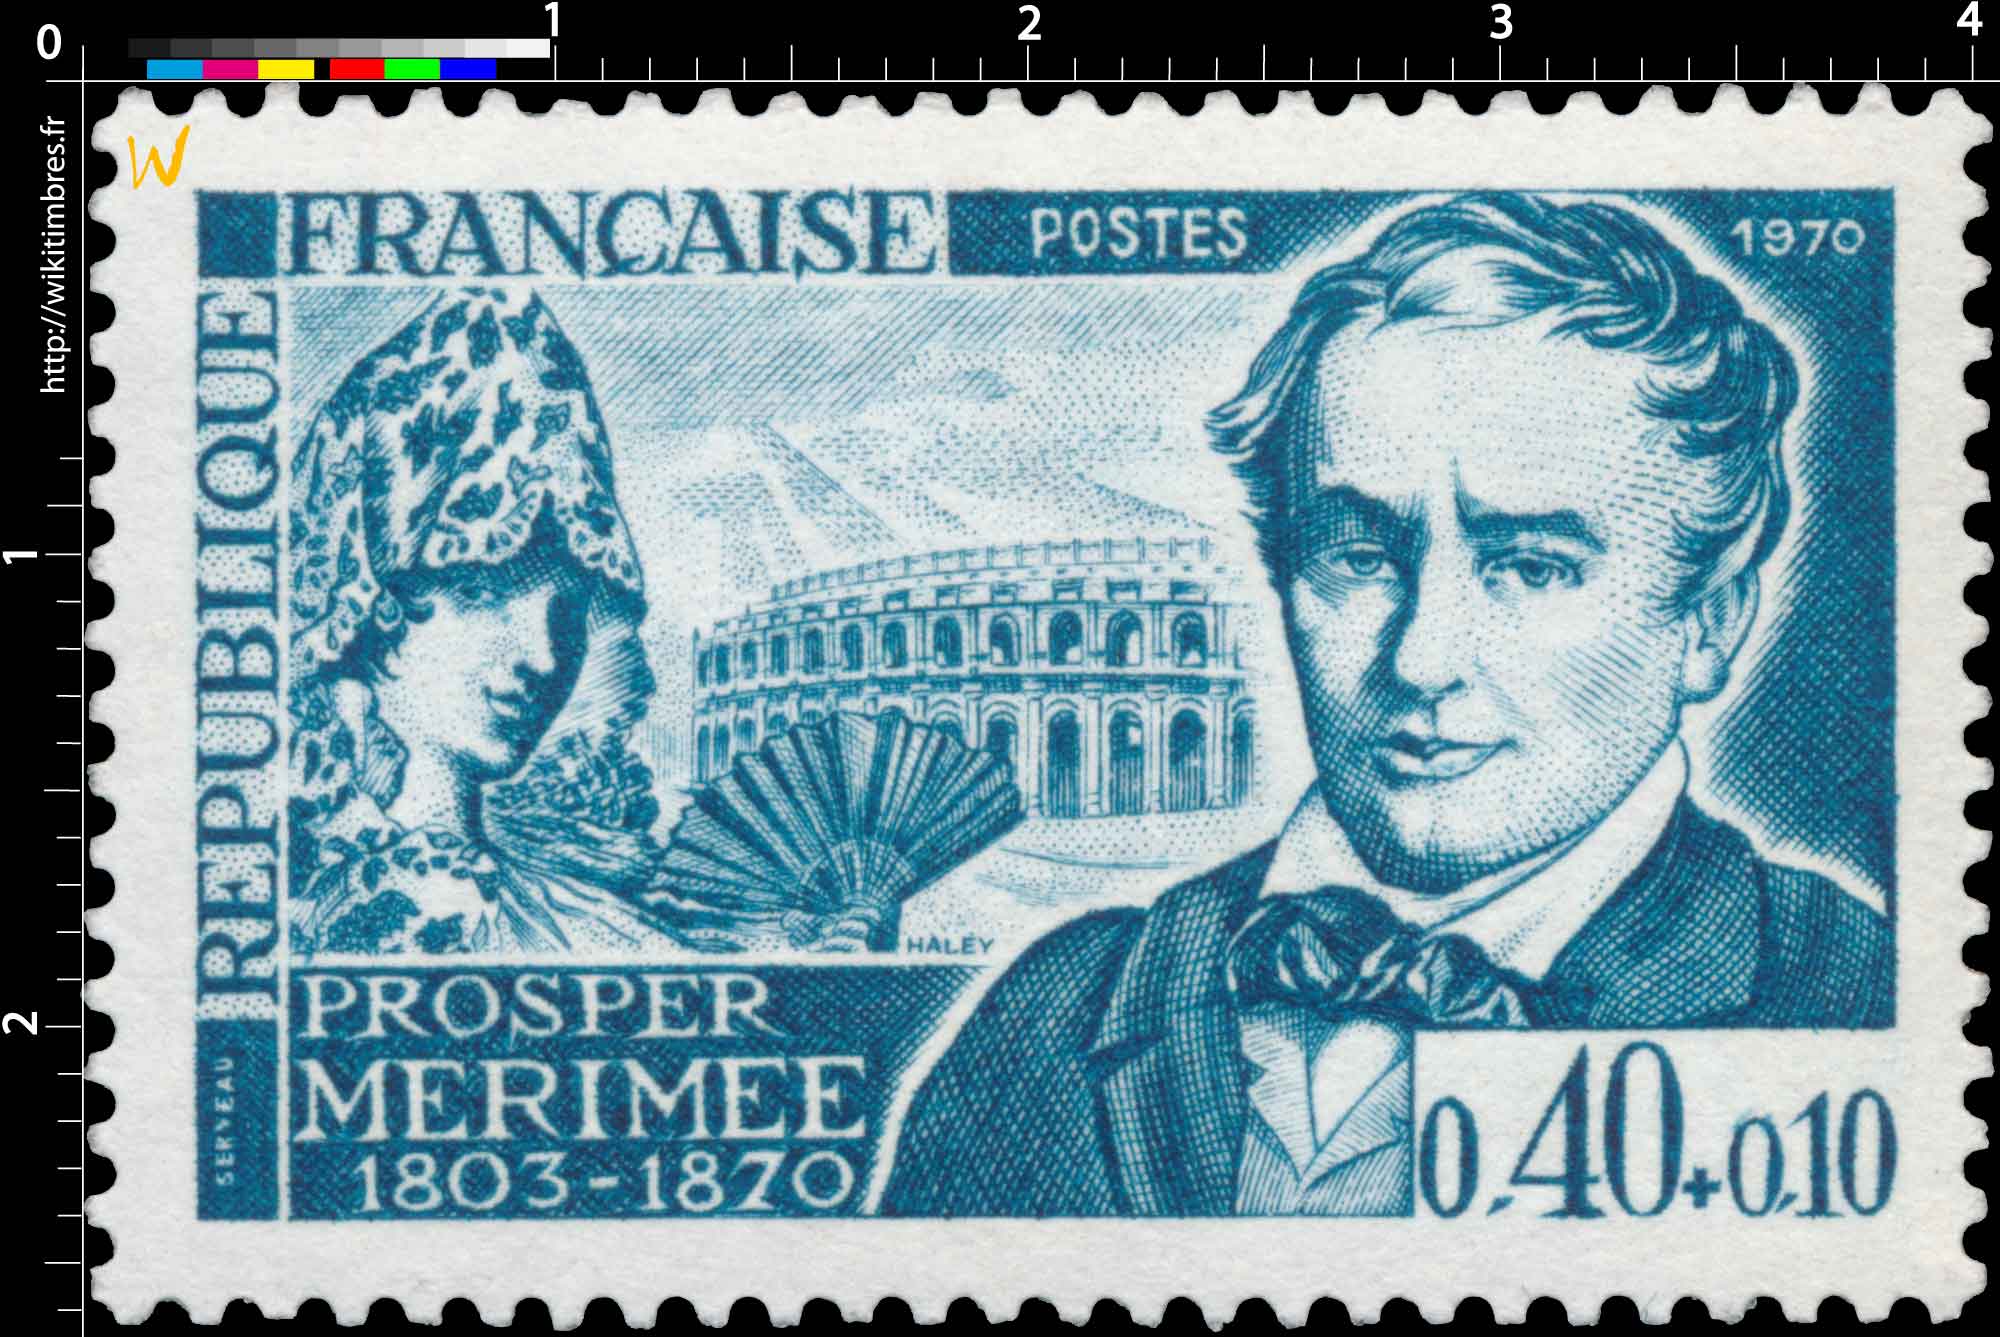 1970 PROSPER MÉRIMÉE 1803-1870